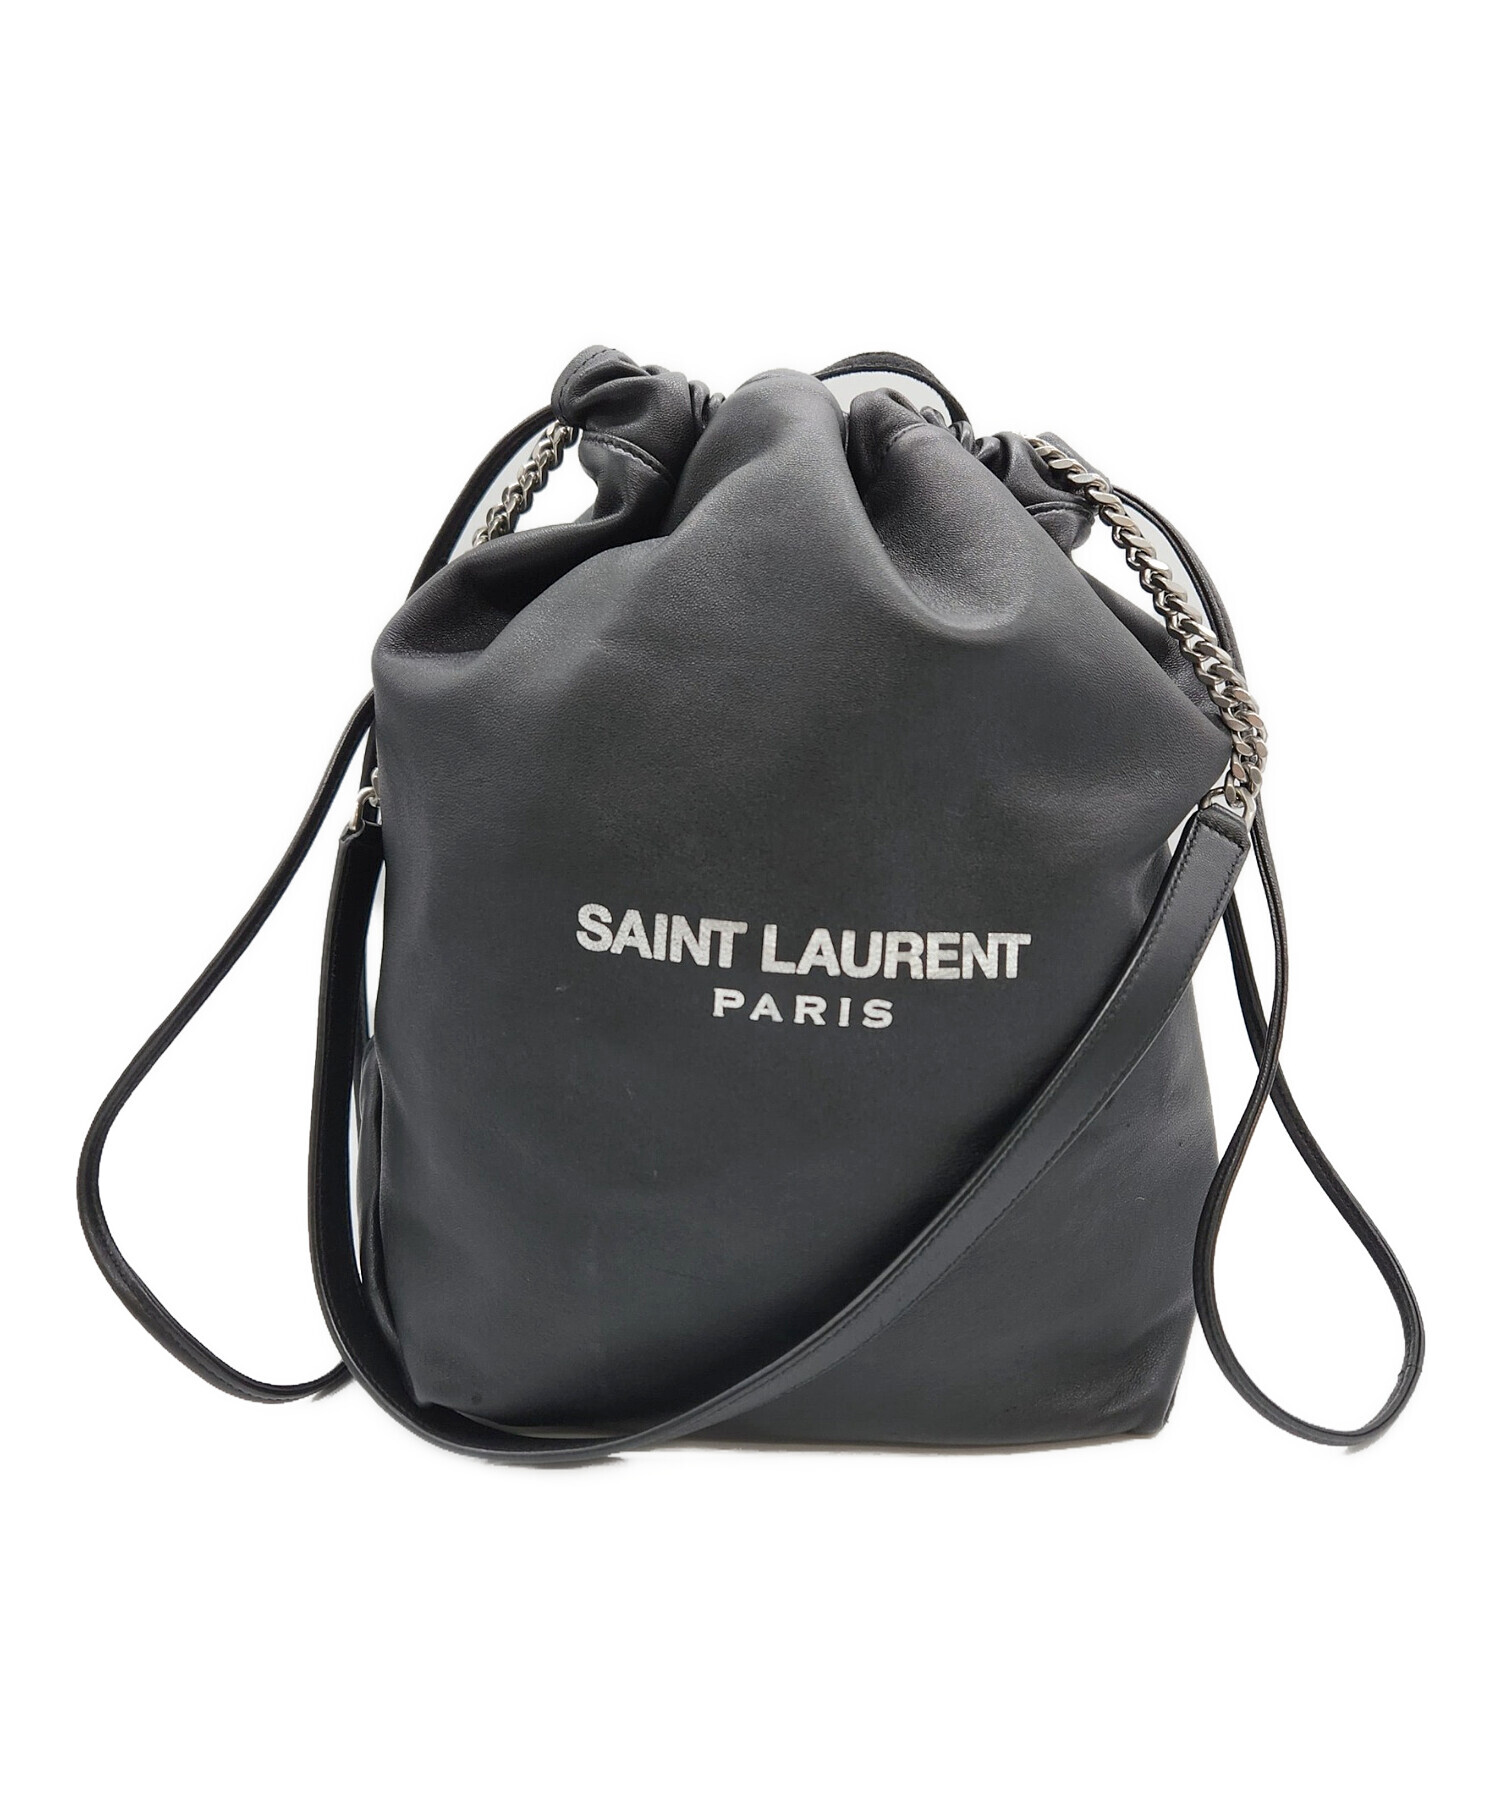 Saint Laurent Paris (サンローランパリ) チェーンショルダーバッグ ブラック サイズ:下記参照